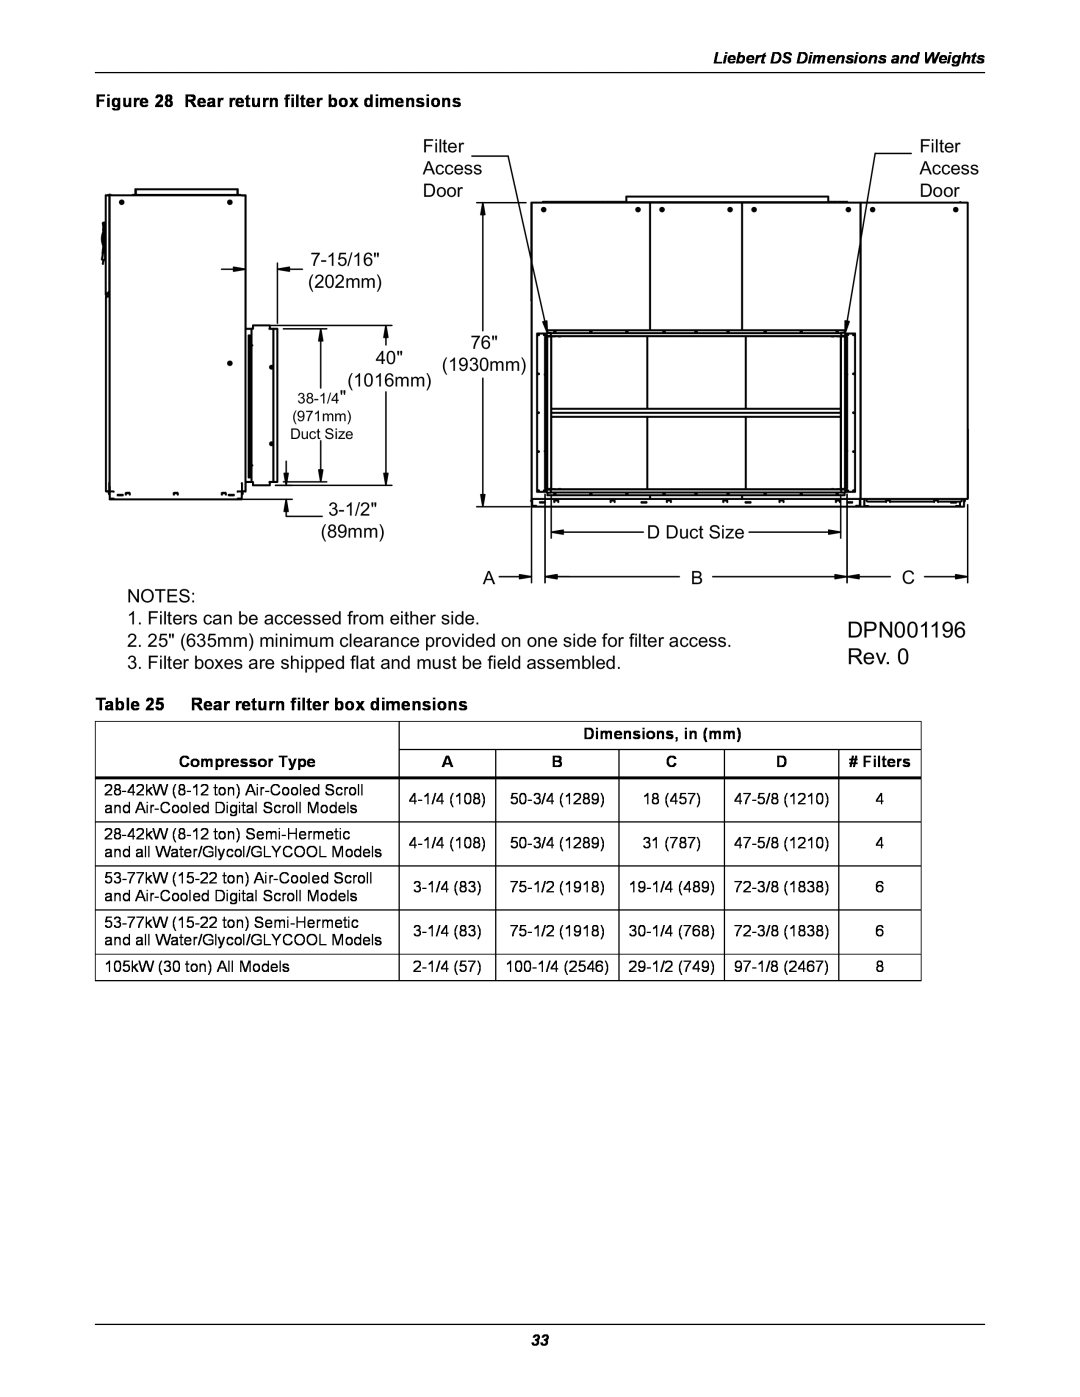 Liebert DS user manual DPN001196 Rev, Rear return filter box dimensions 